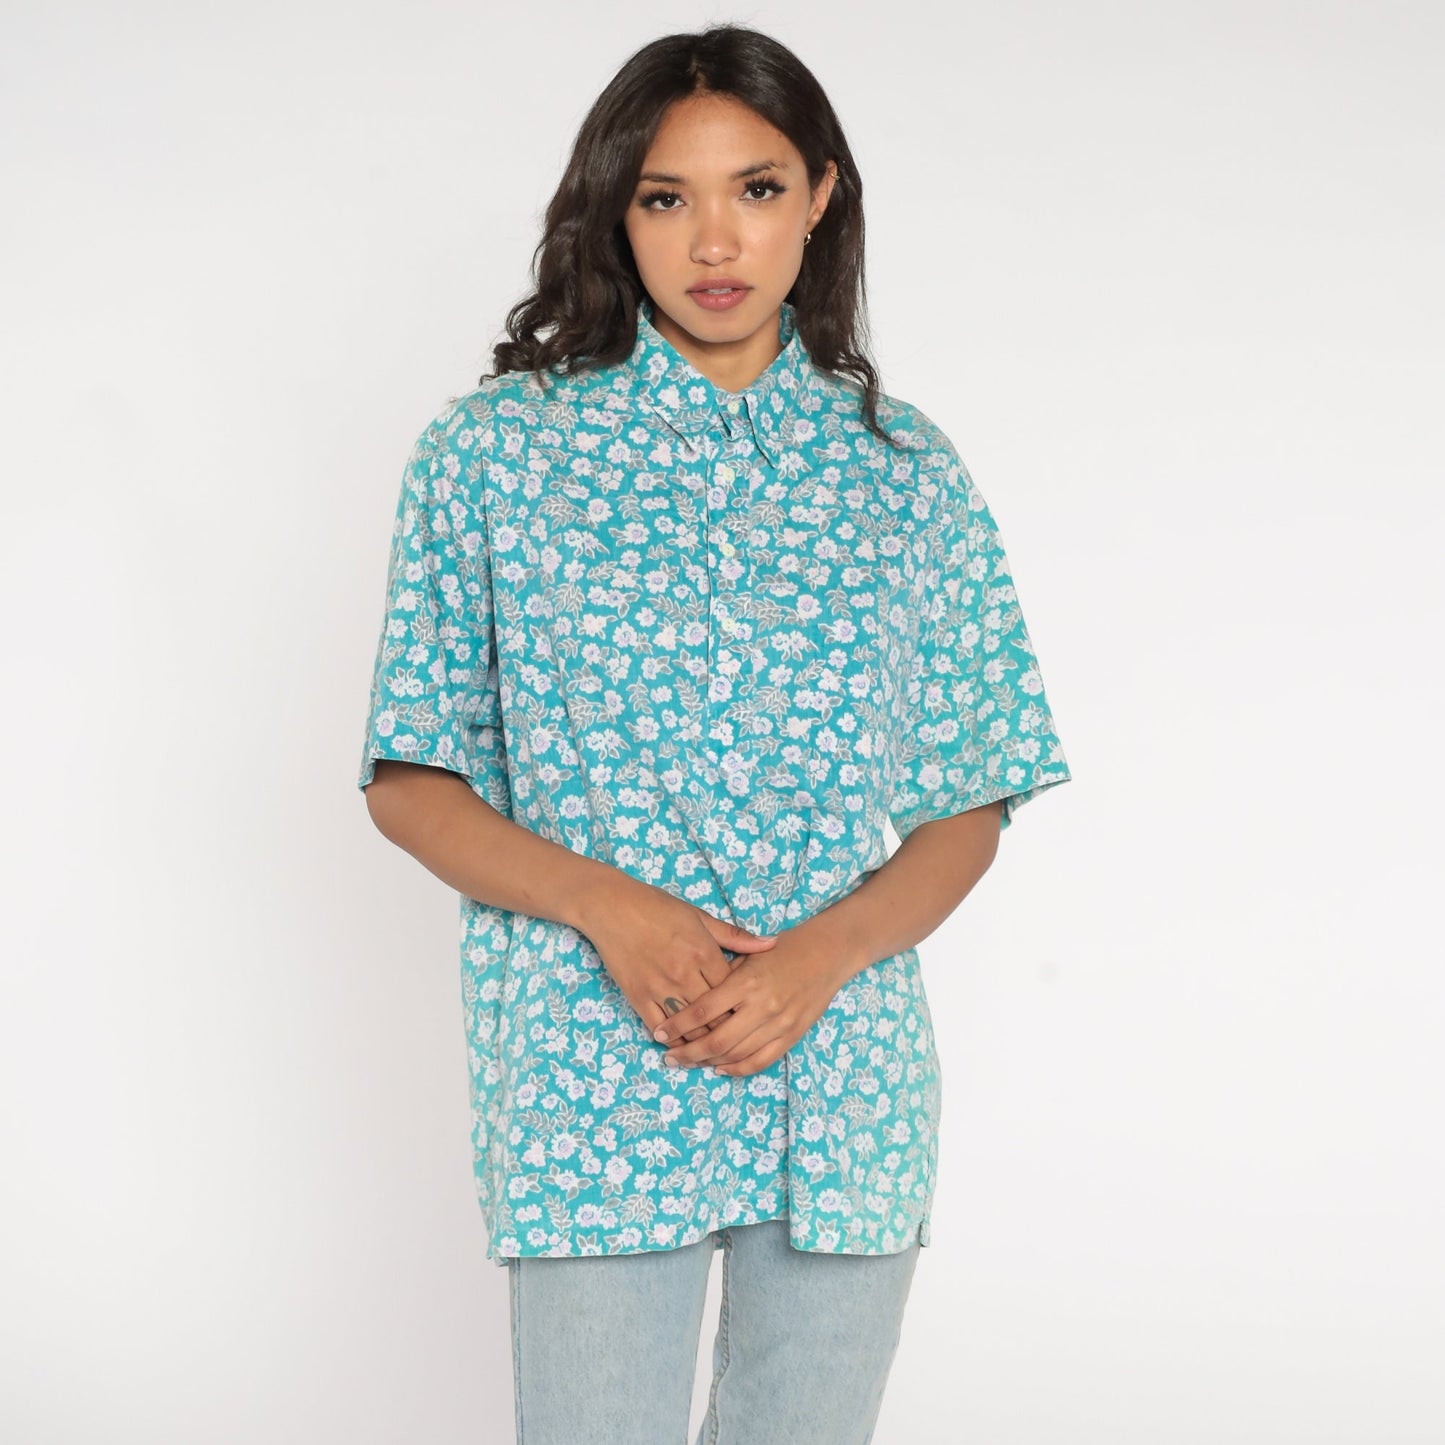 Blue Floral Shirt 90s Collared Half Button Up Shirt Retro Preppy Flower Print Shirt Short Sleeve Summer Top Collar Vintage 1990s Men's Large